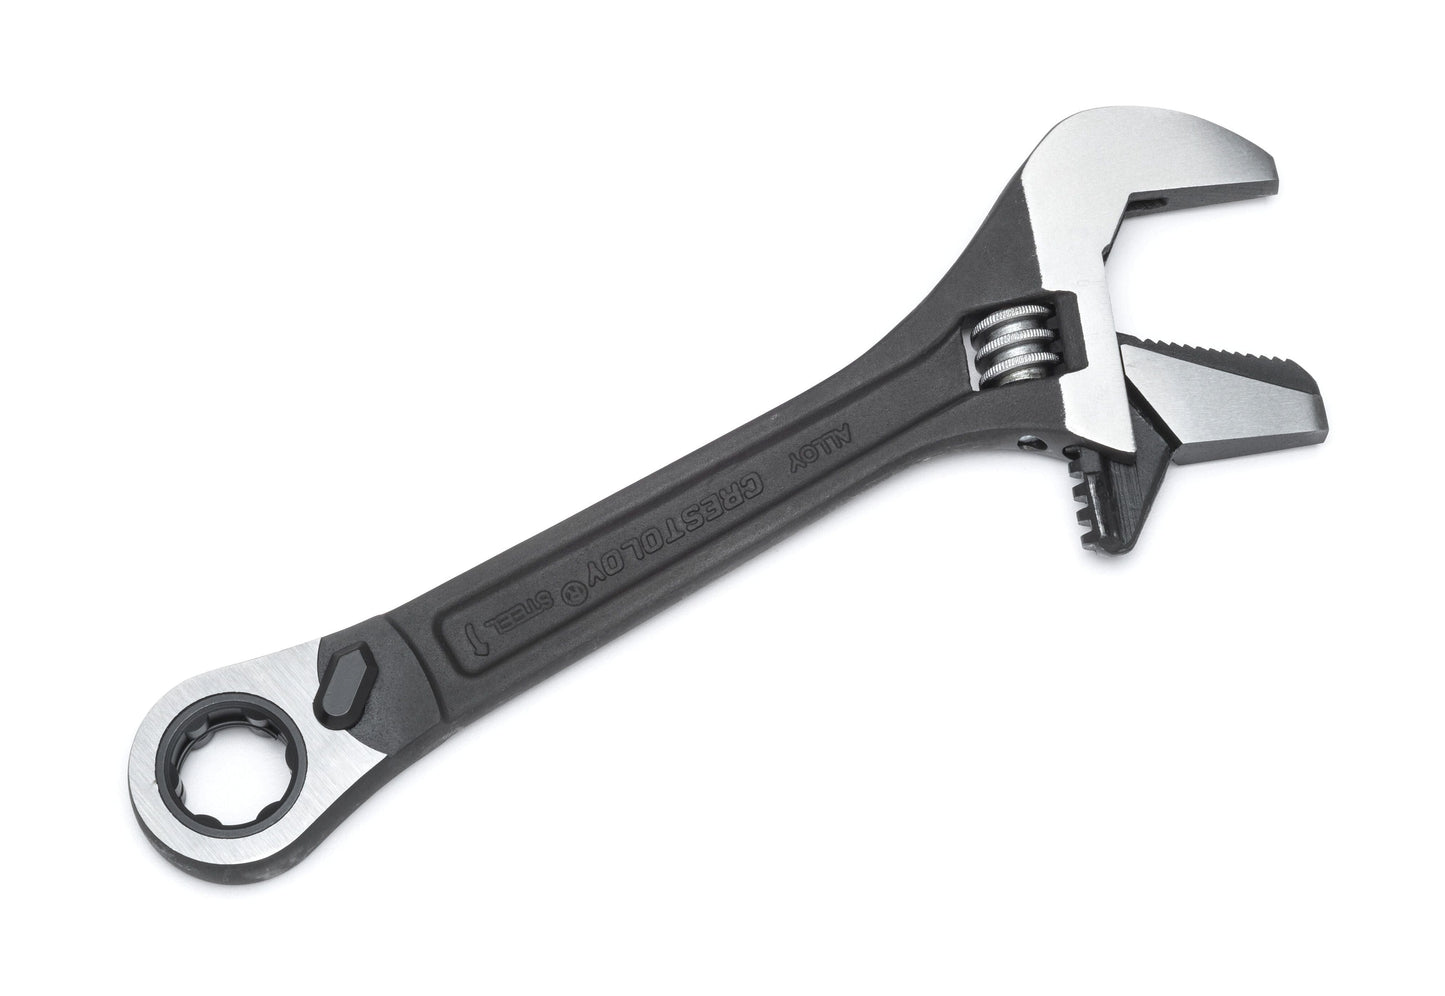 Crescent 3/8" Pass-Thru Adjustable Wrench Set w/Spline Sockets - CPTAW8 Tool Kits Crescent 